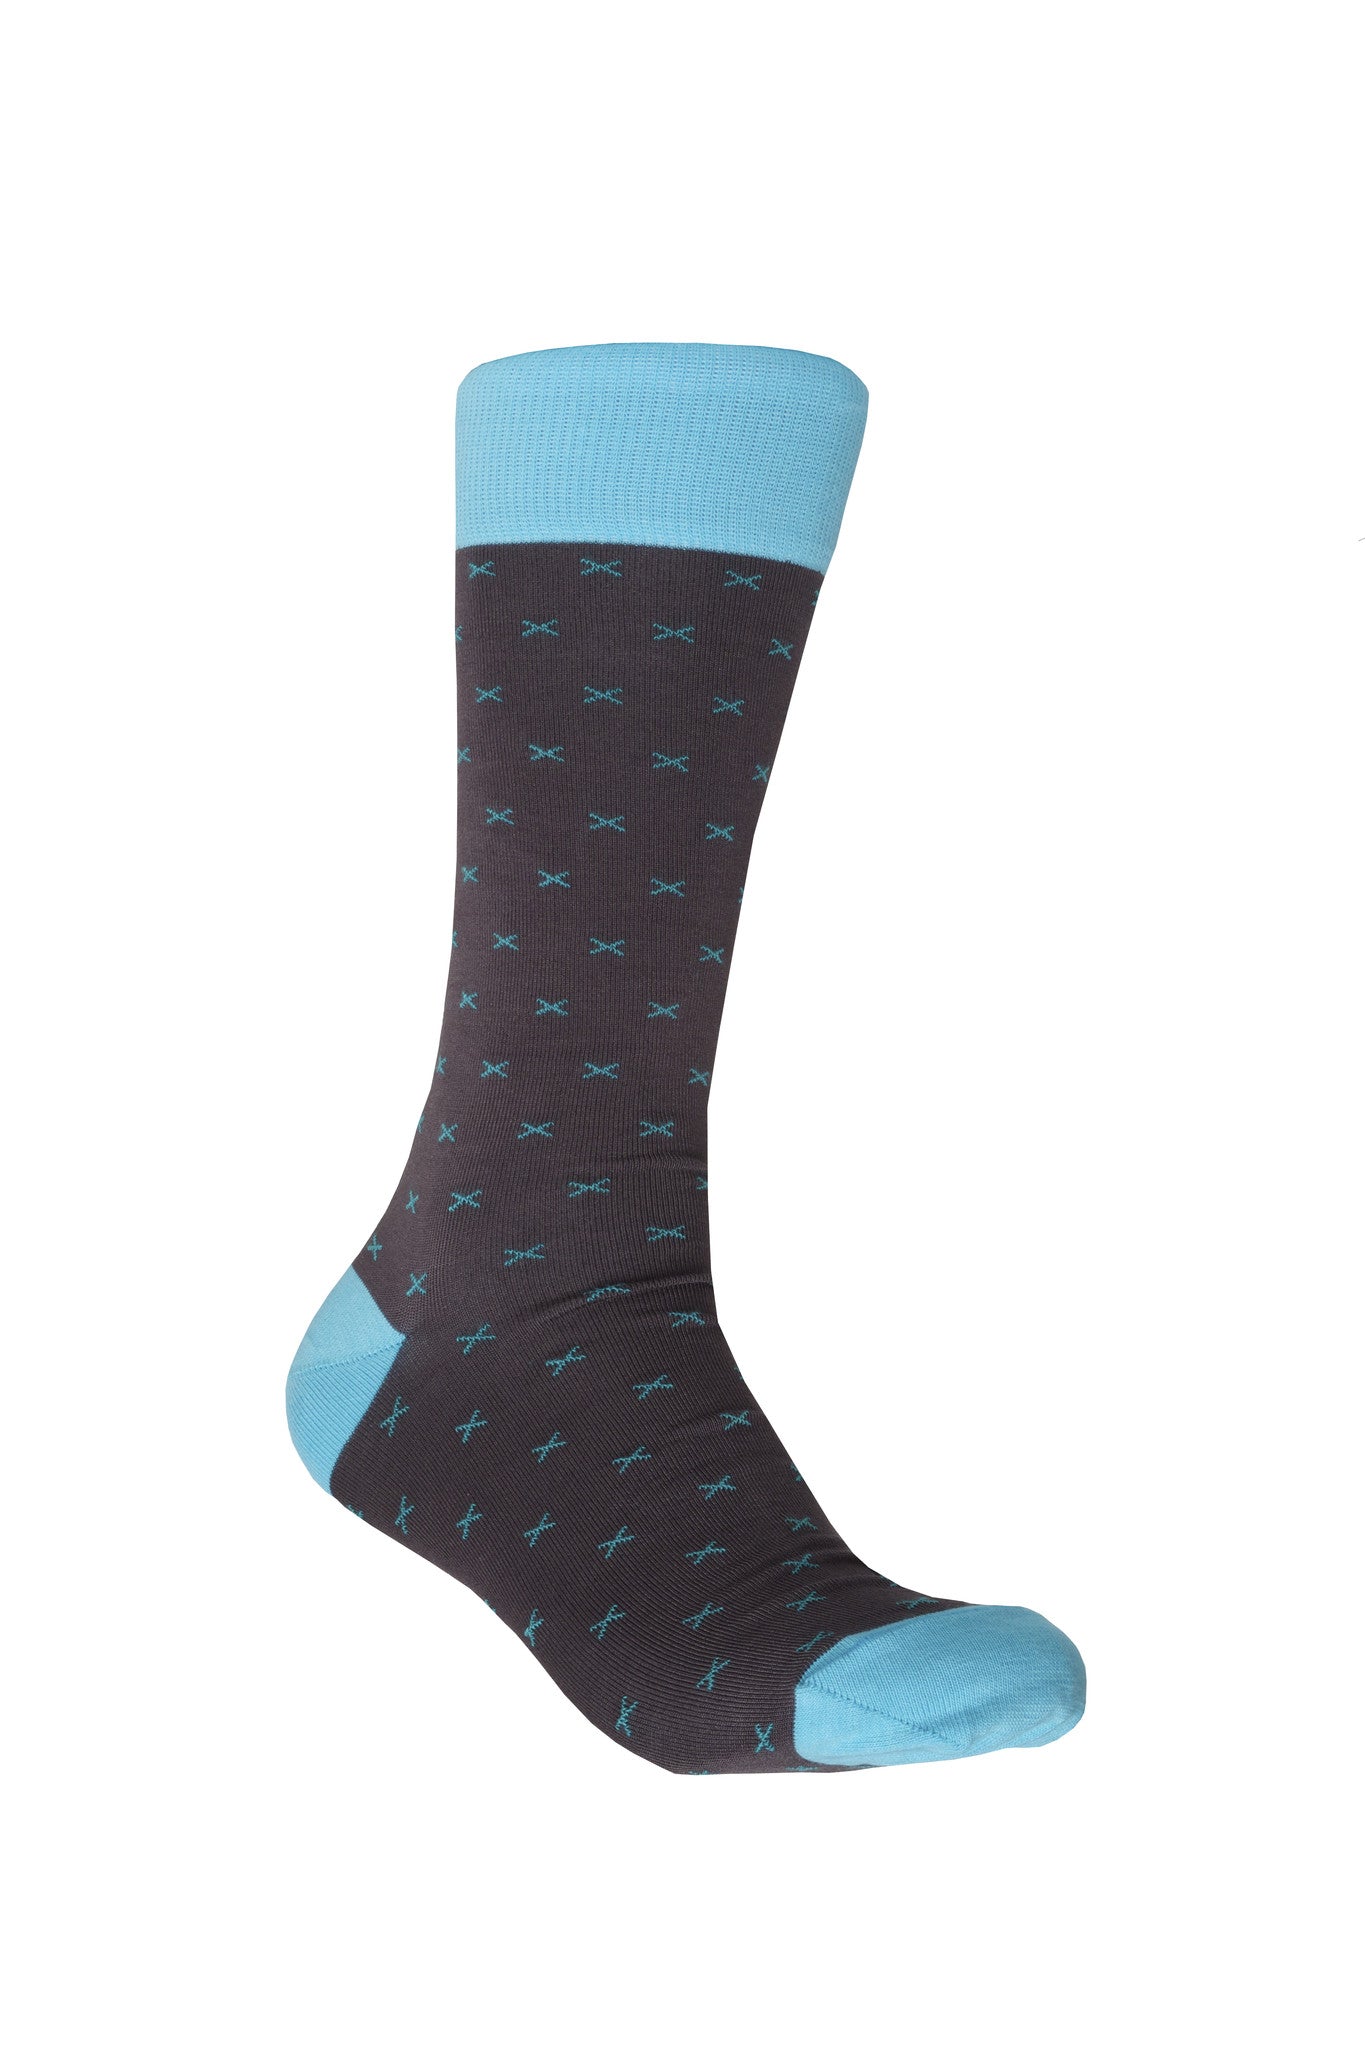 Giraffecool-Giraffe-Cool-Brand-Dark-Grey-And-Blue-X-Cross-Mercerized-And-Brushed-Cotton-Fashion-Socks-Front